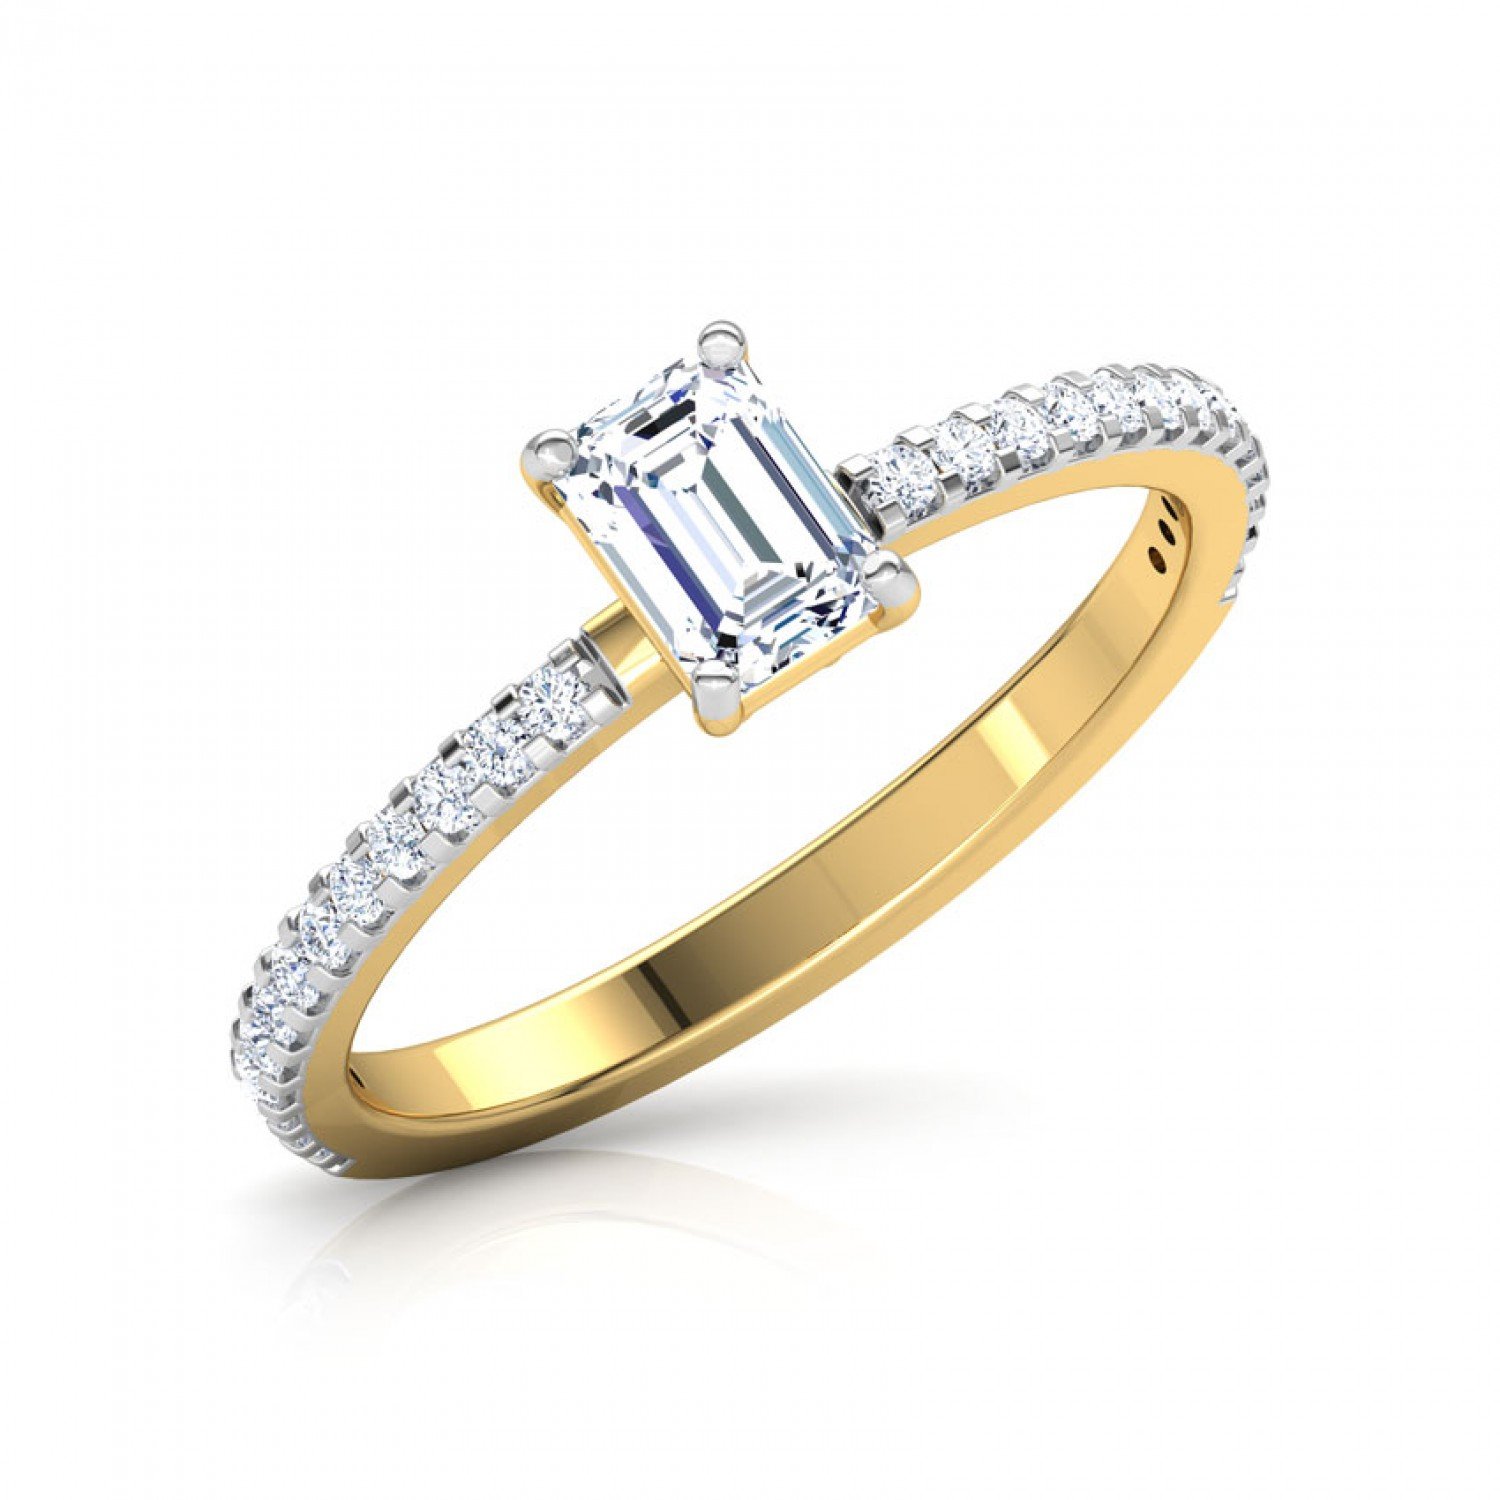 Buy Diamond Rings For Women Online at Best Price